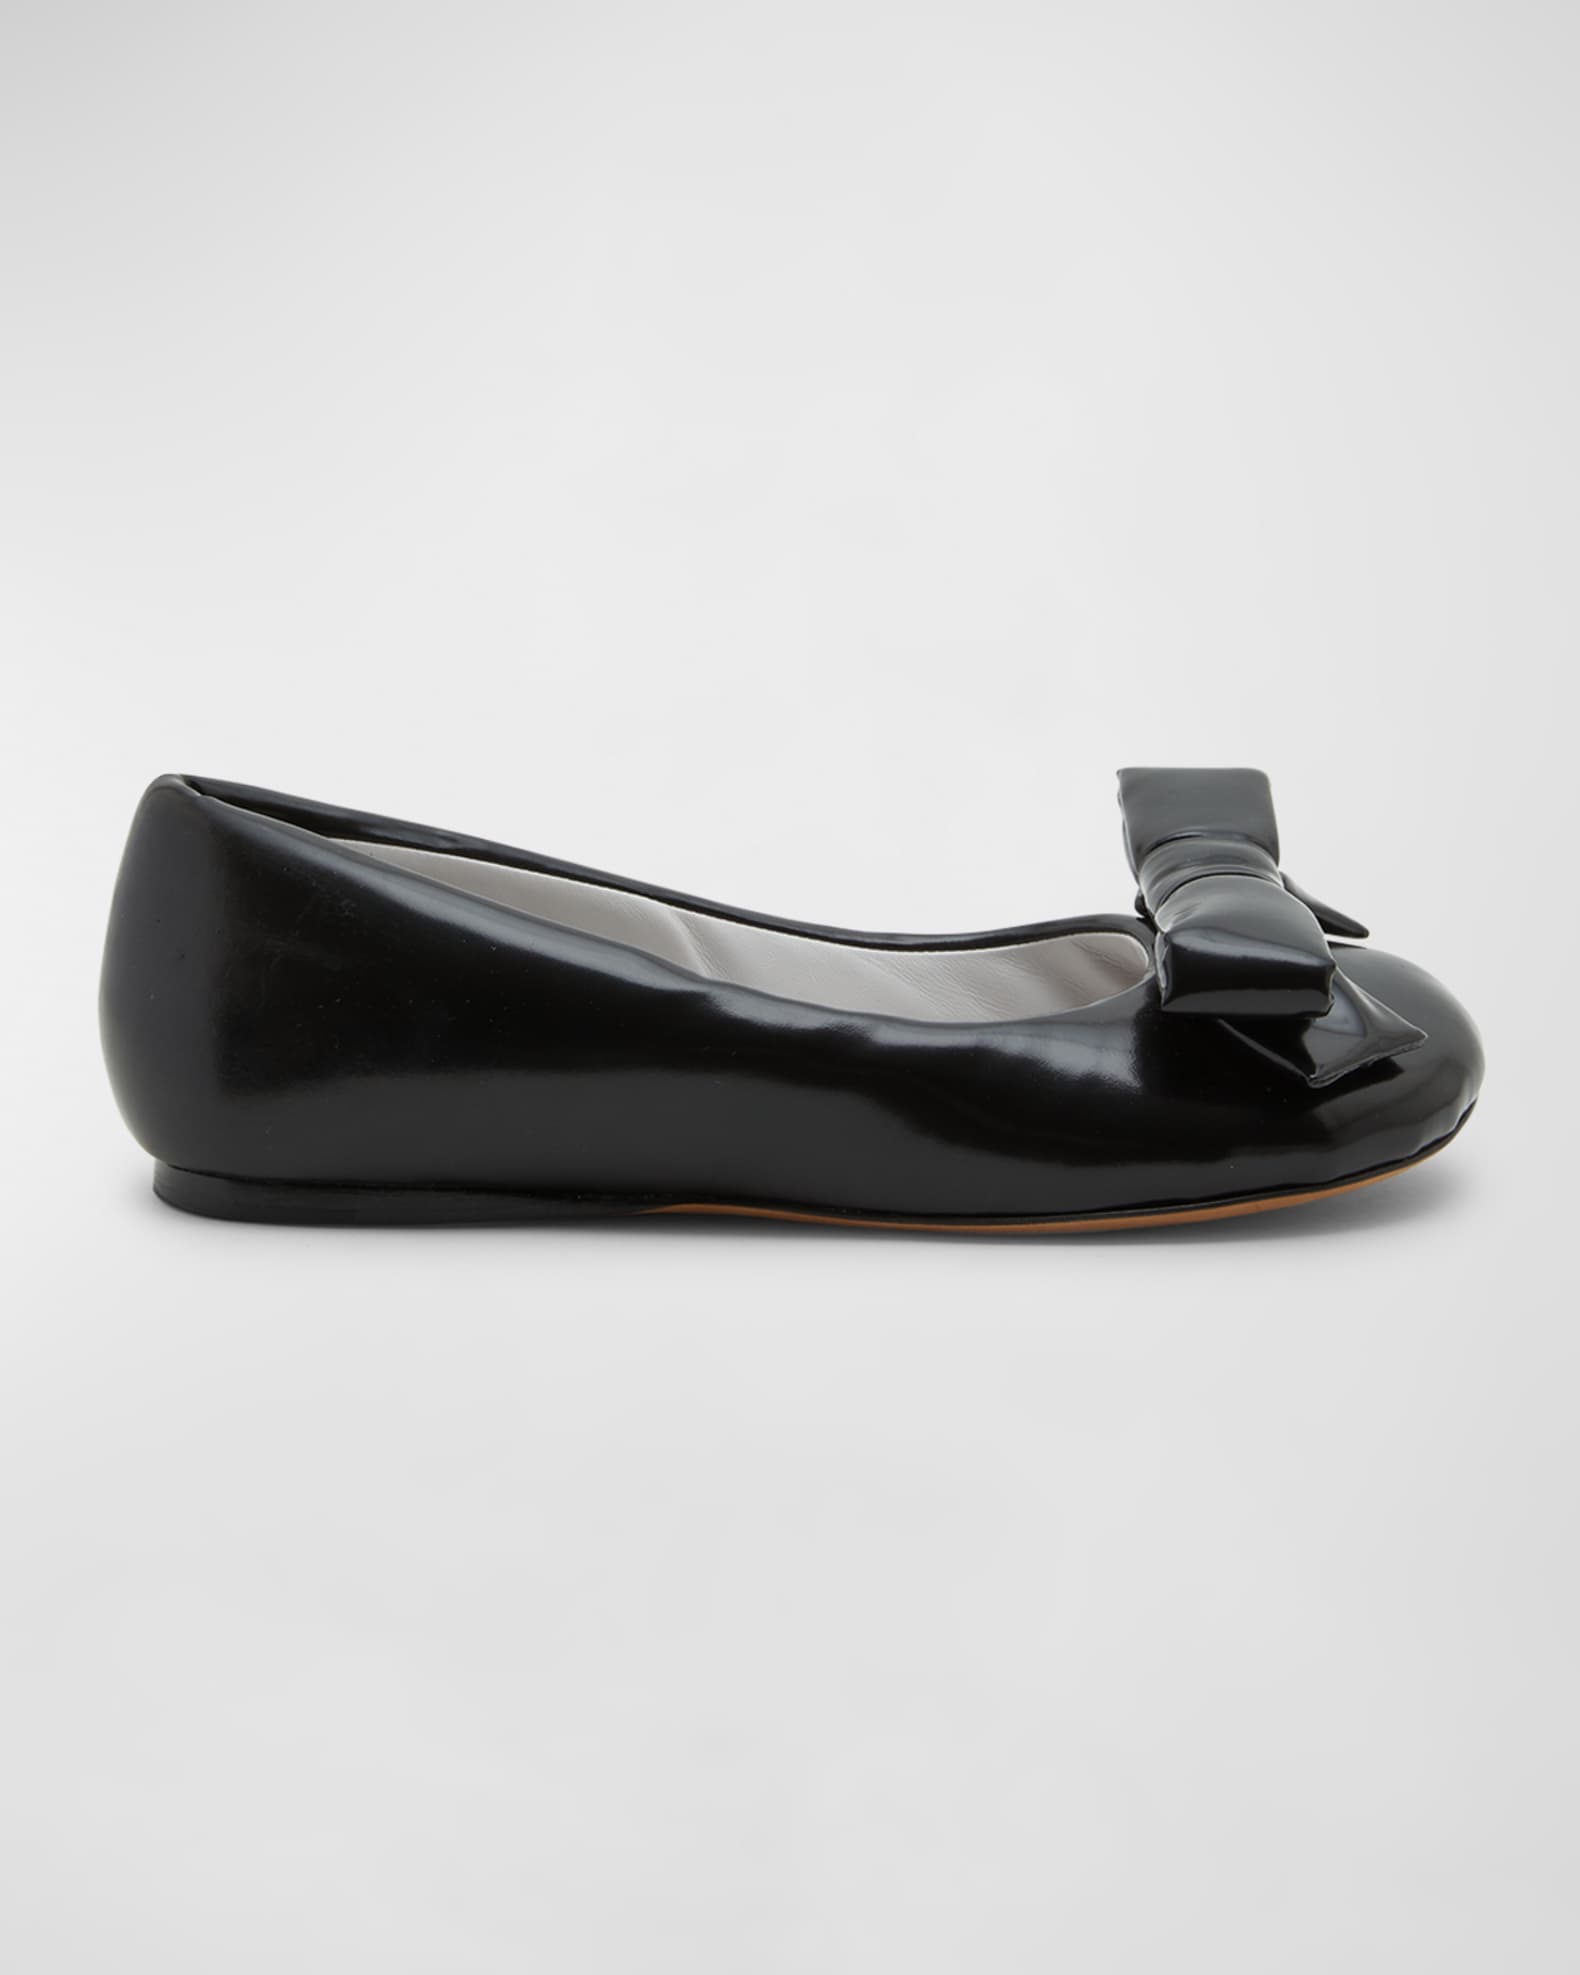 Loewe Puffy Patent Leather Ballerina Flats | Neiman Marcus